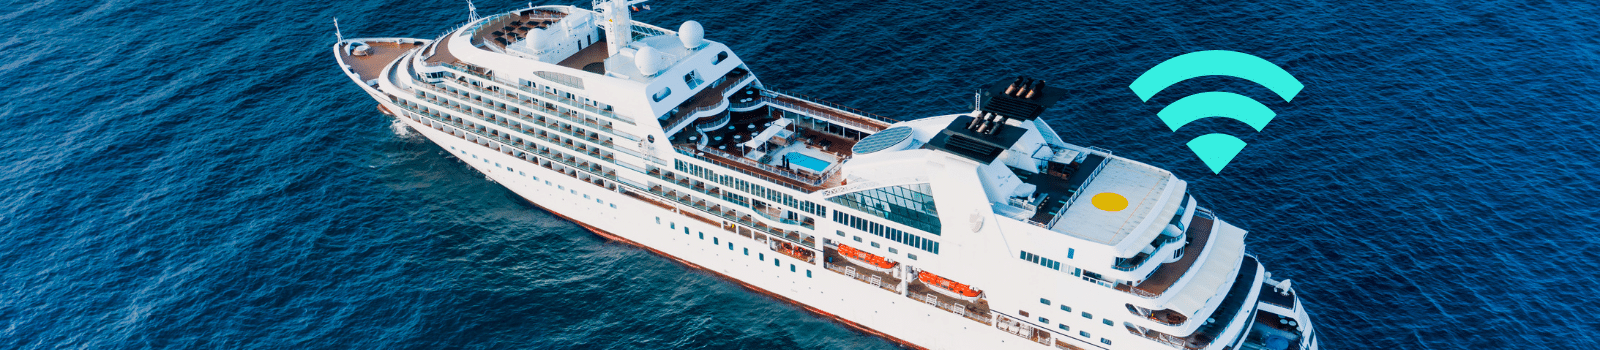 Wi Fi on Cruise Ships – Ensuring Maritime Connectivity B